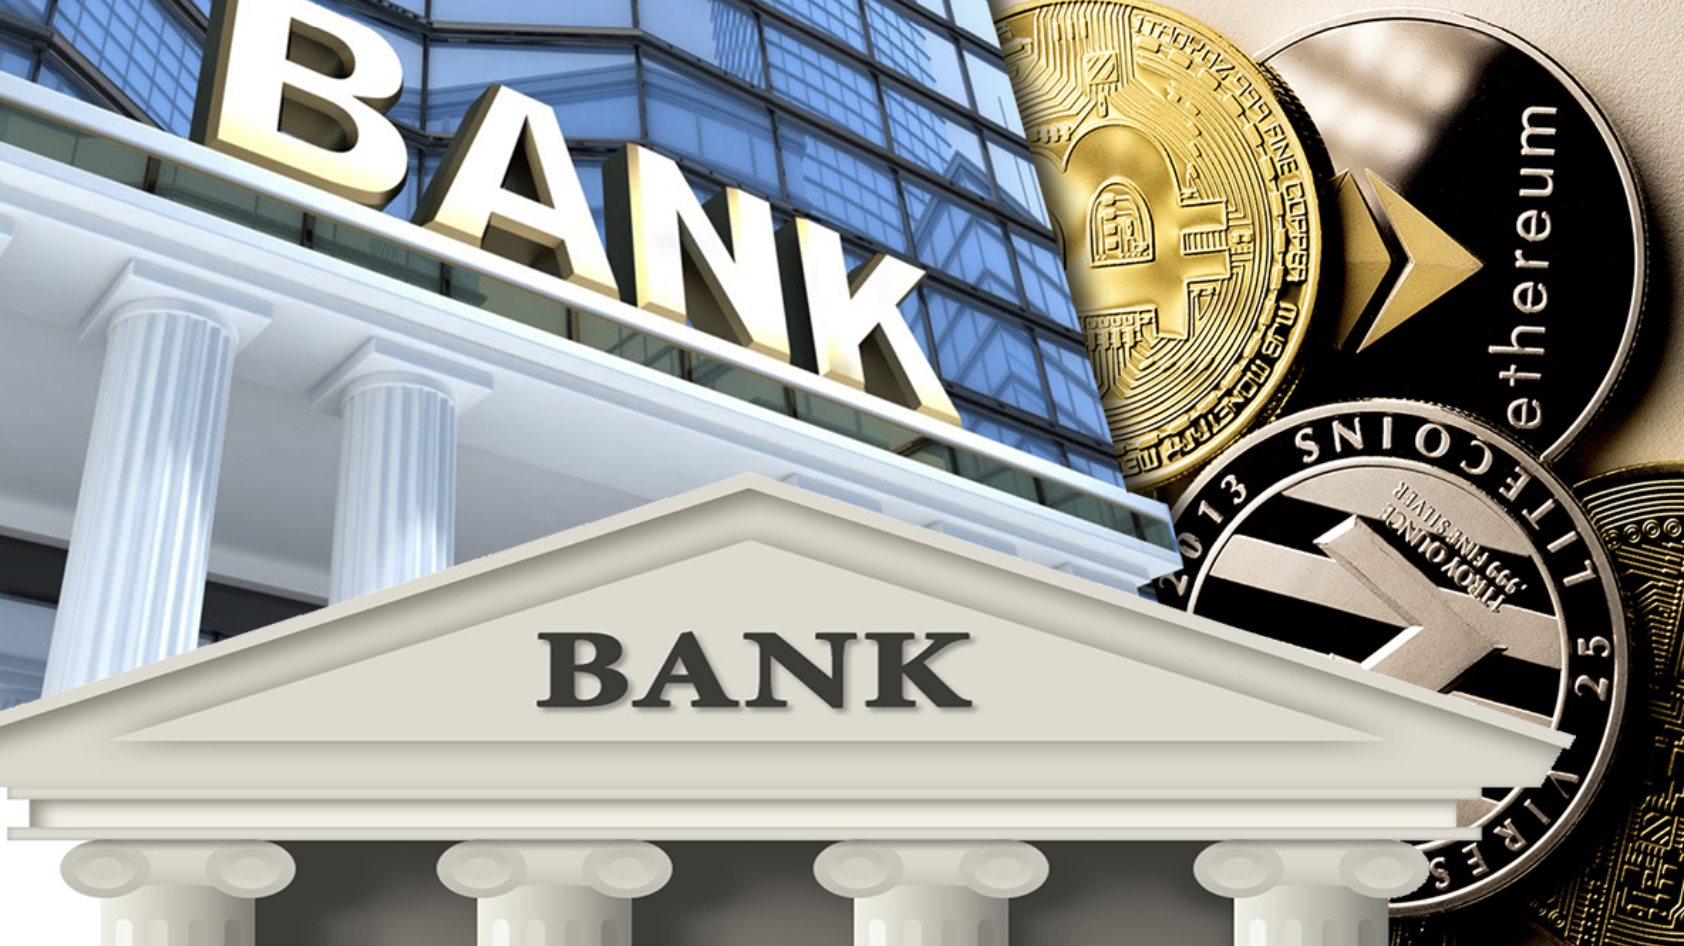 Authority banking. Felanda's Banking System. Basel Committee on the Bank supervision logo.